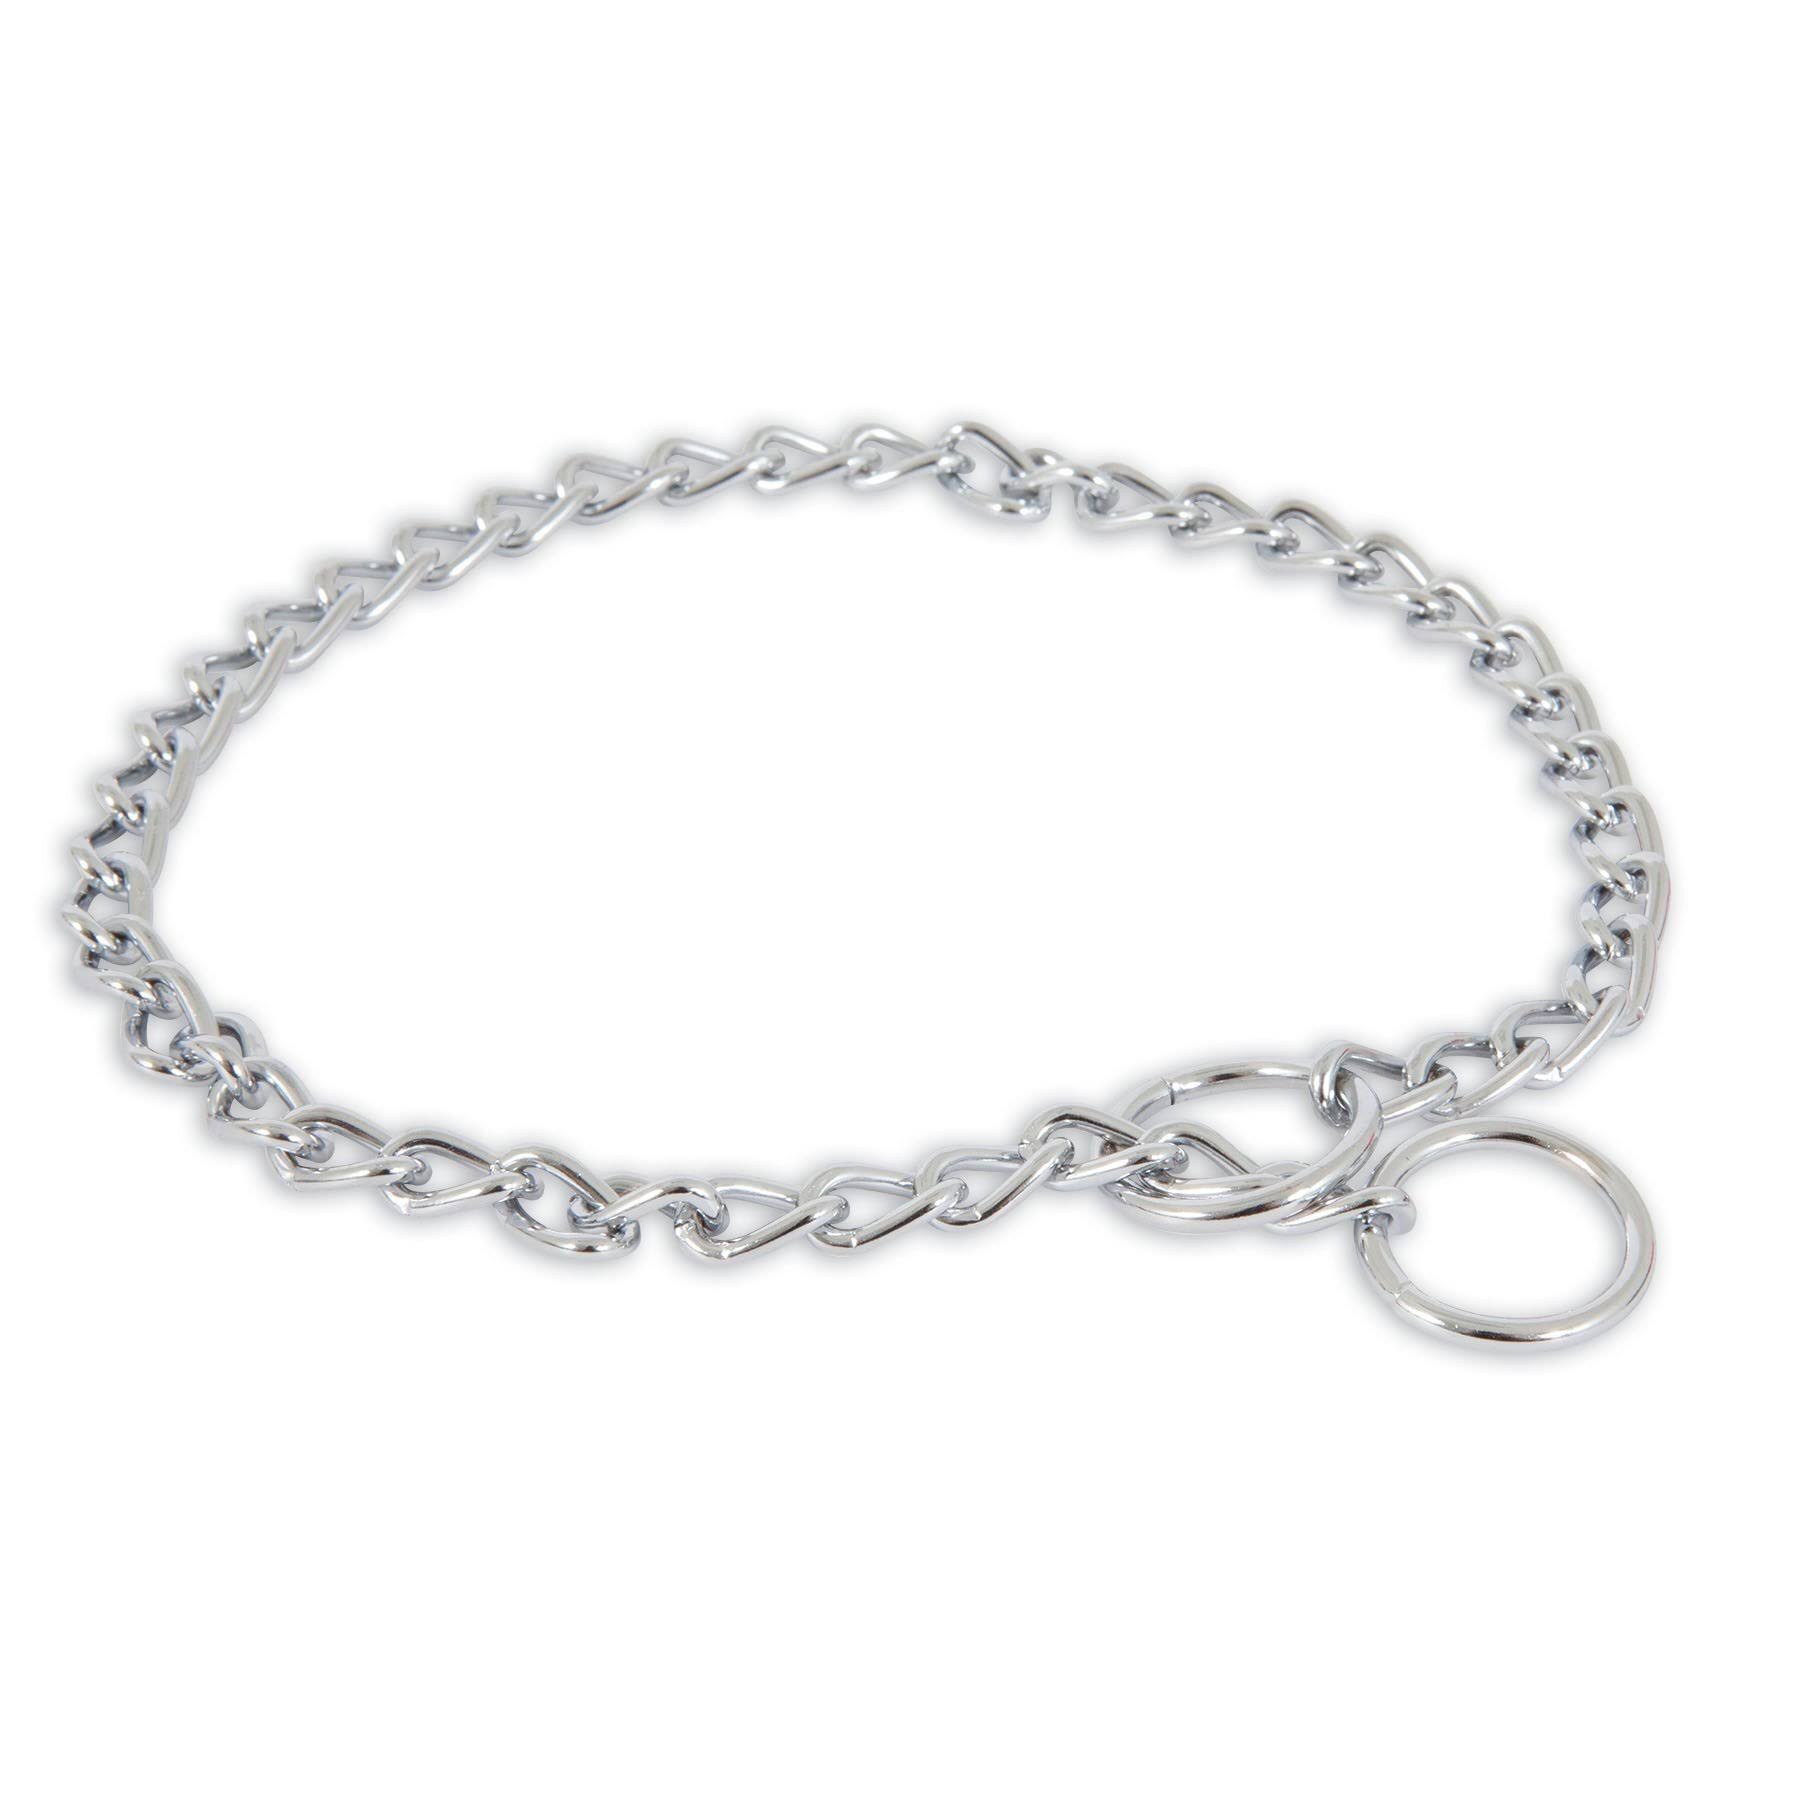 Aspen Pet Mighty Link Chain Dog Collar, 16" x 2.5 mm